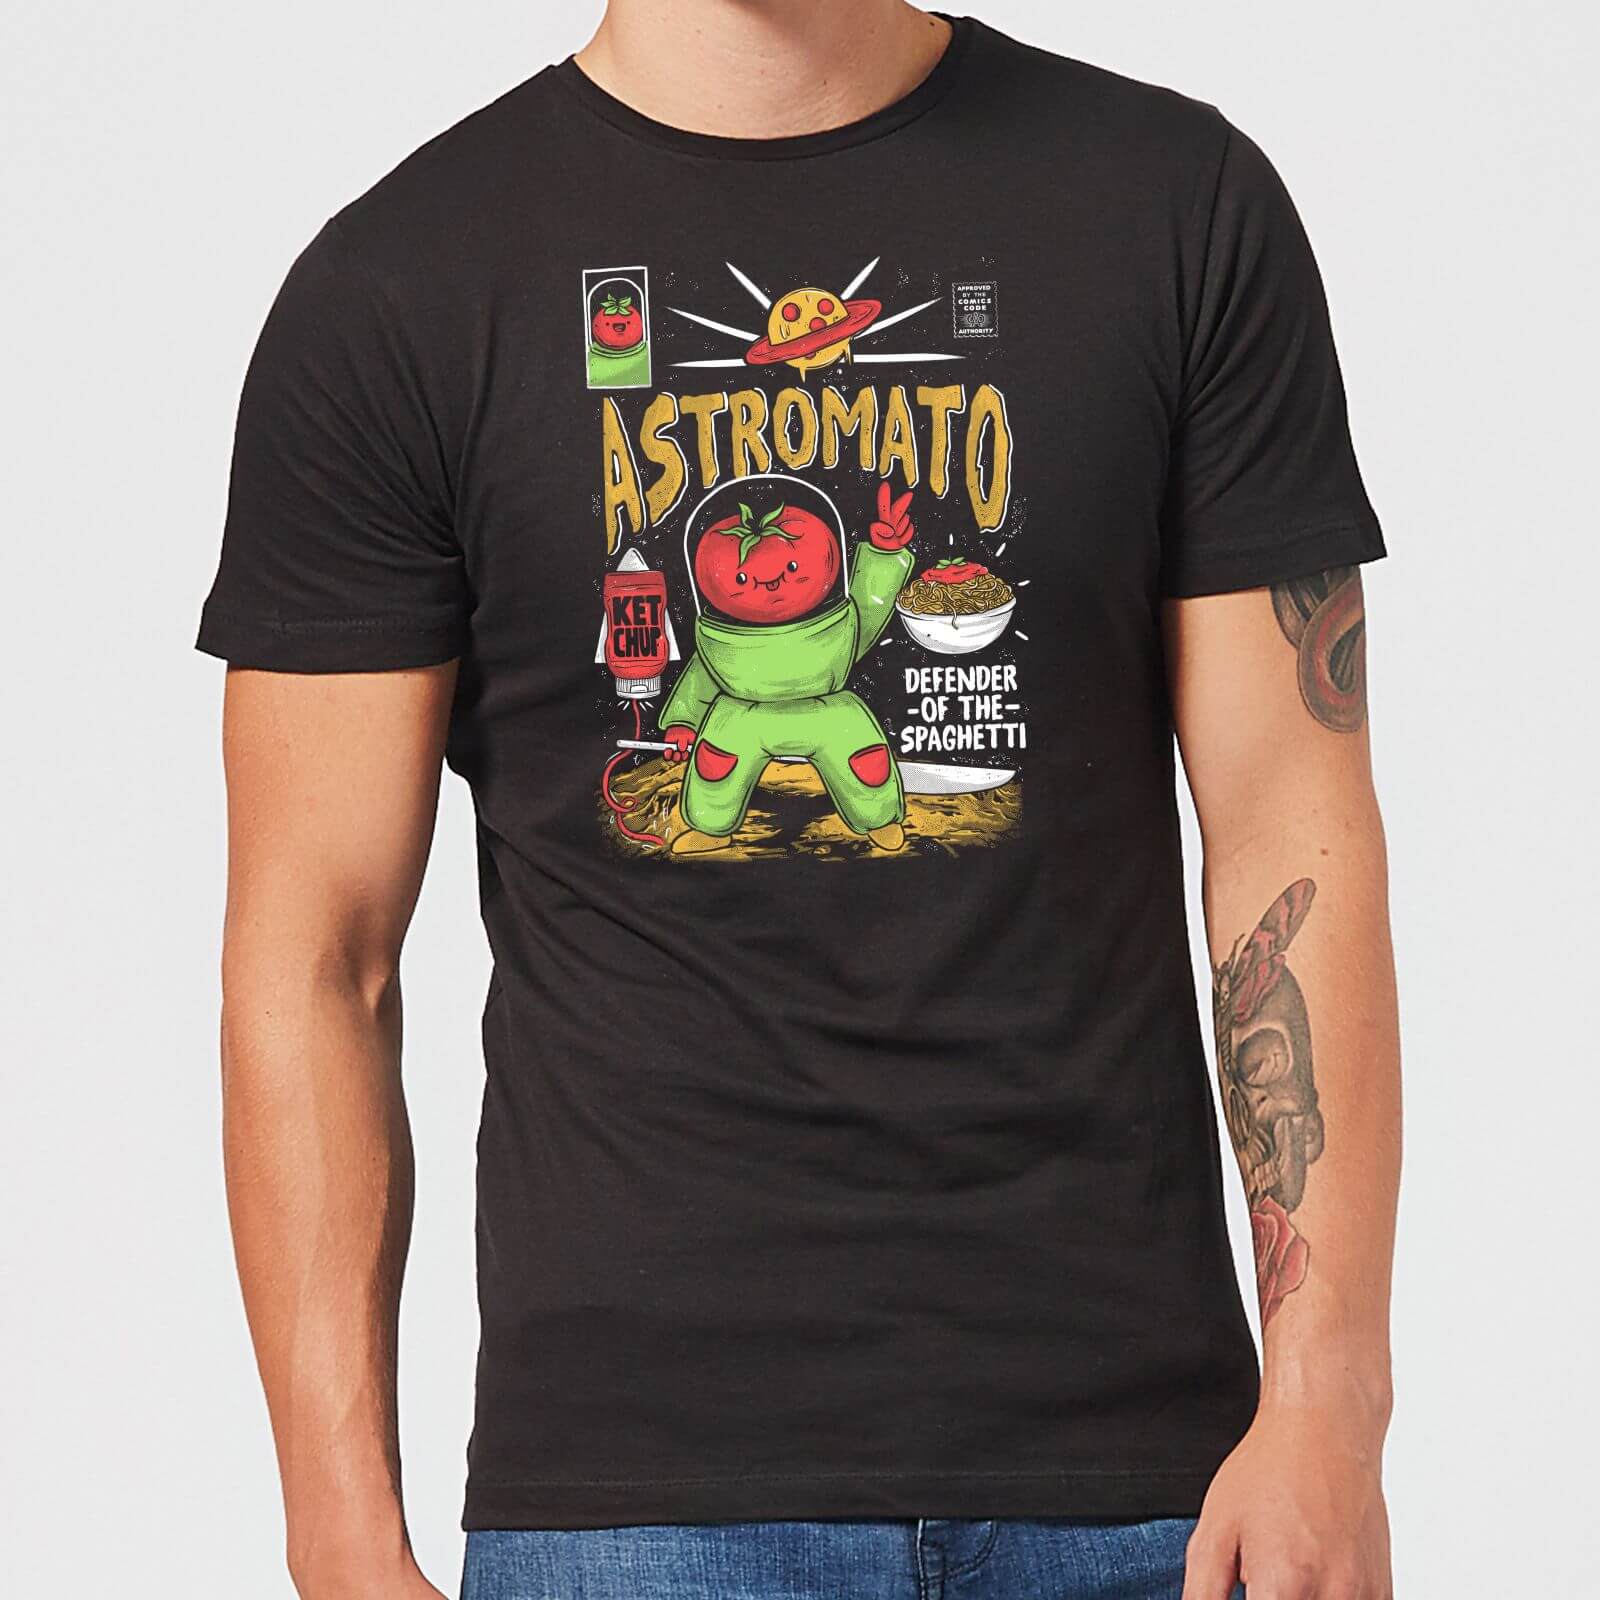 Ilustrata Astromato Men's T-Shirt - Black - XS - Black